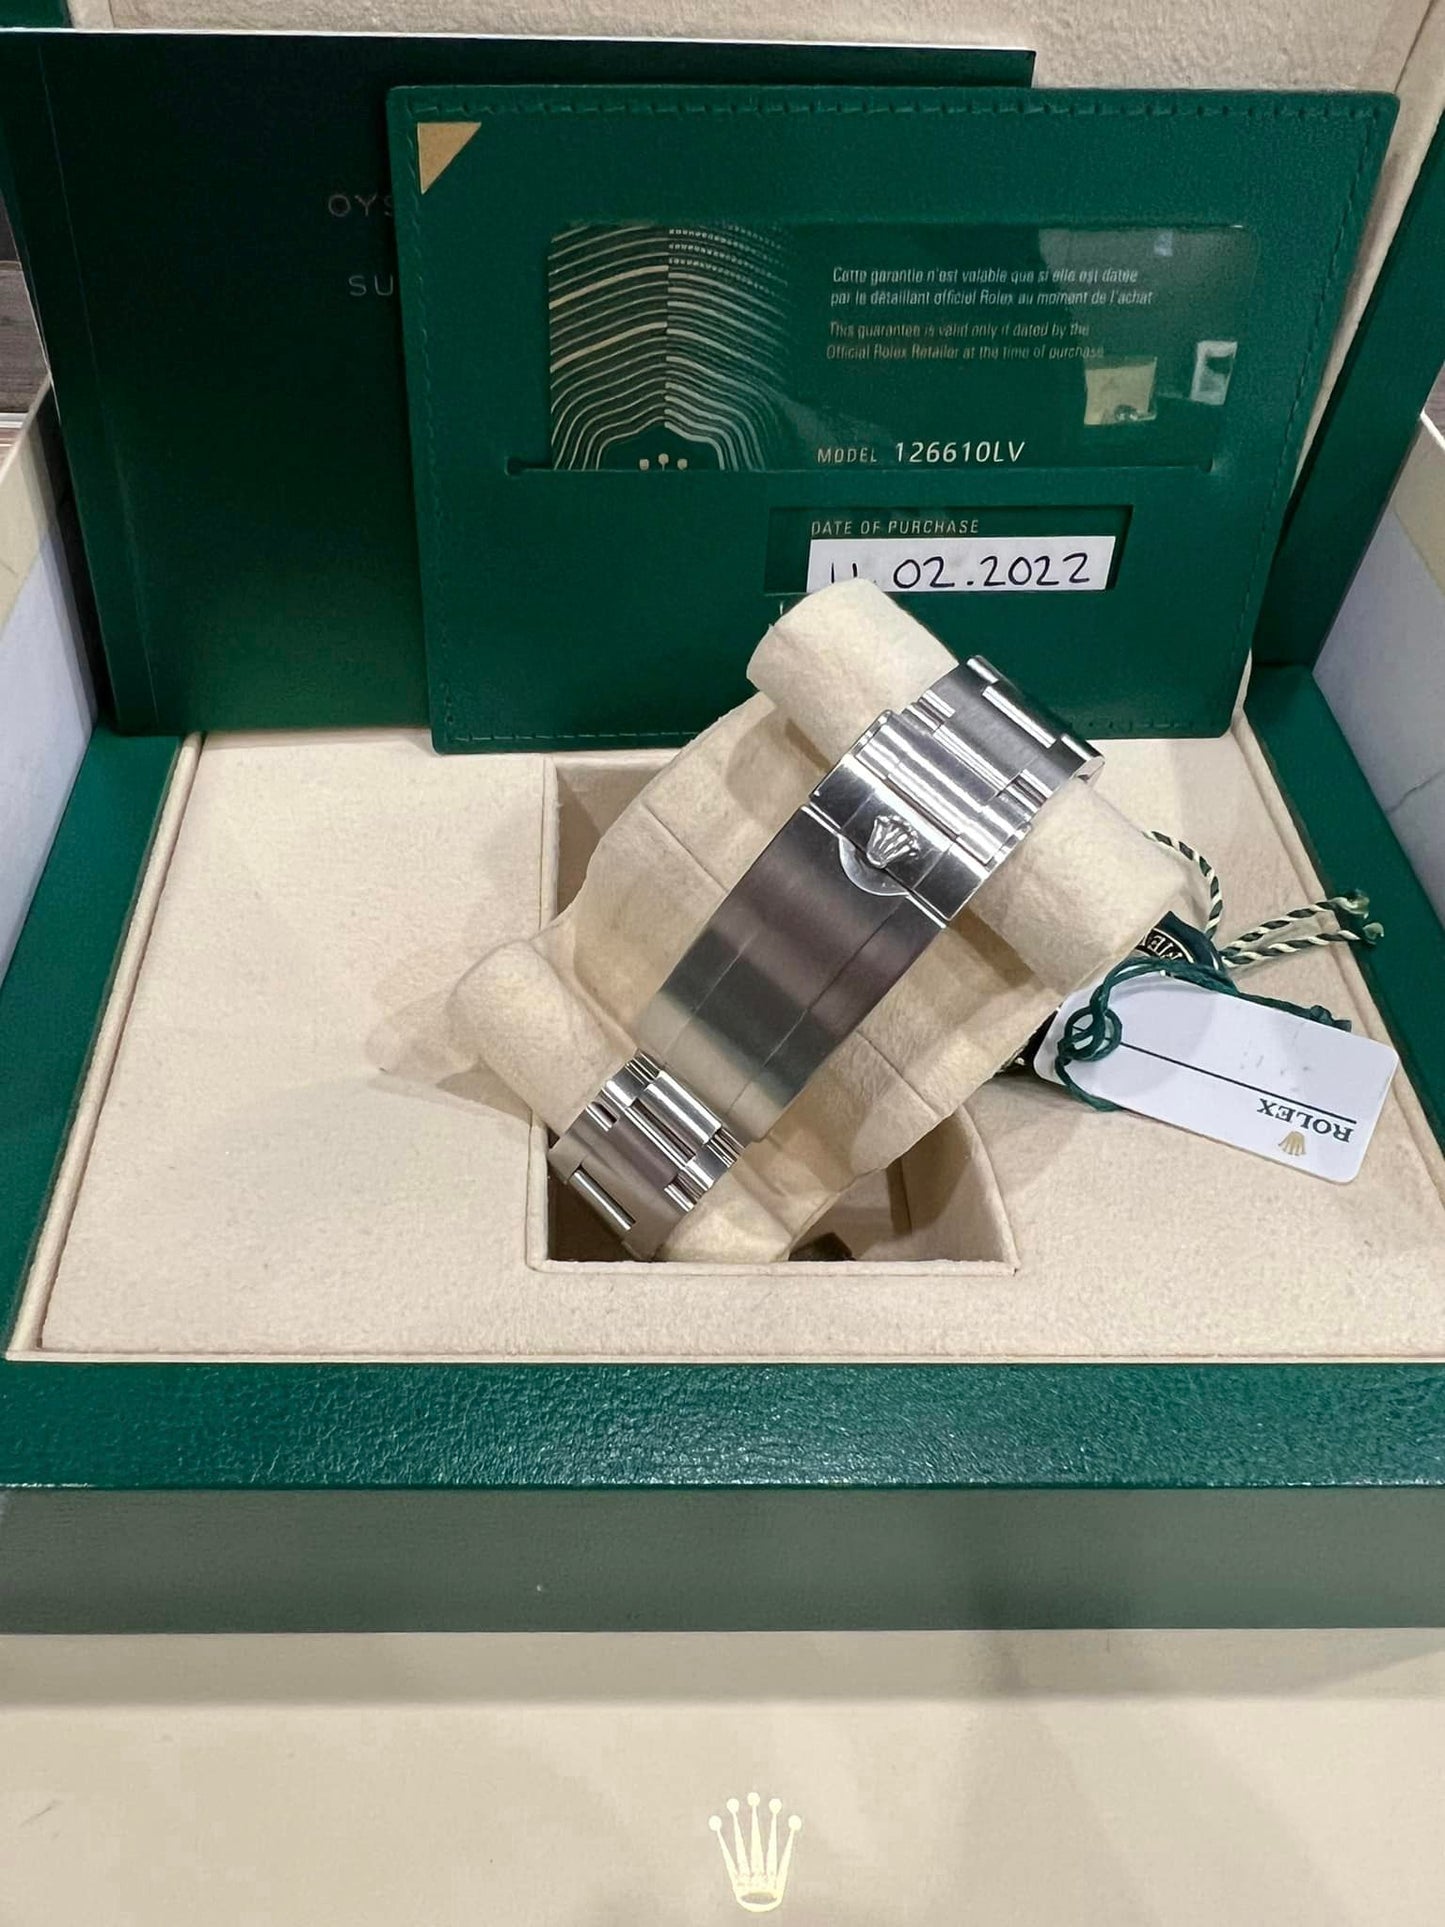 Rolex Submariner Date Starbucks 41mm Green Bezel Box + Papers